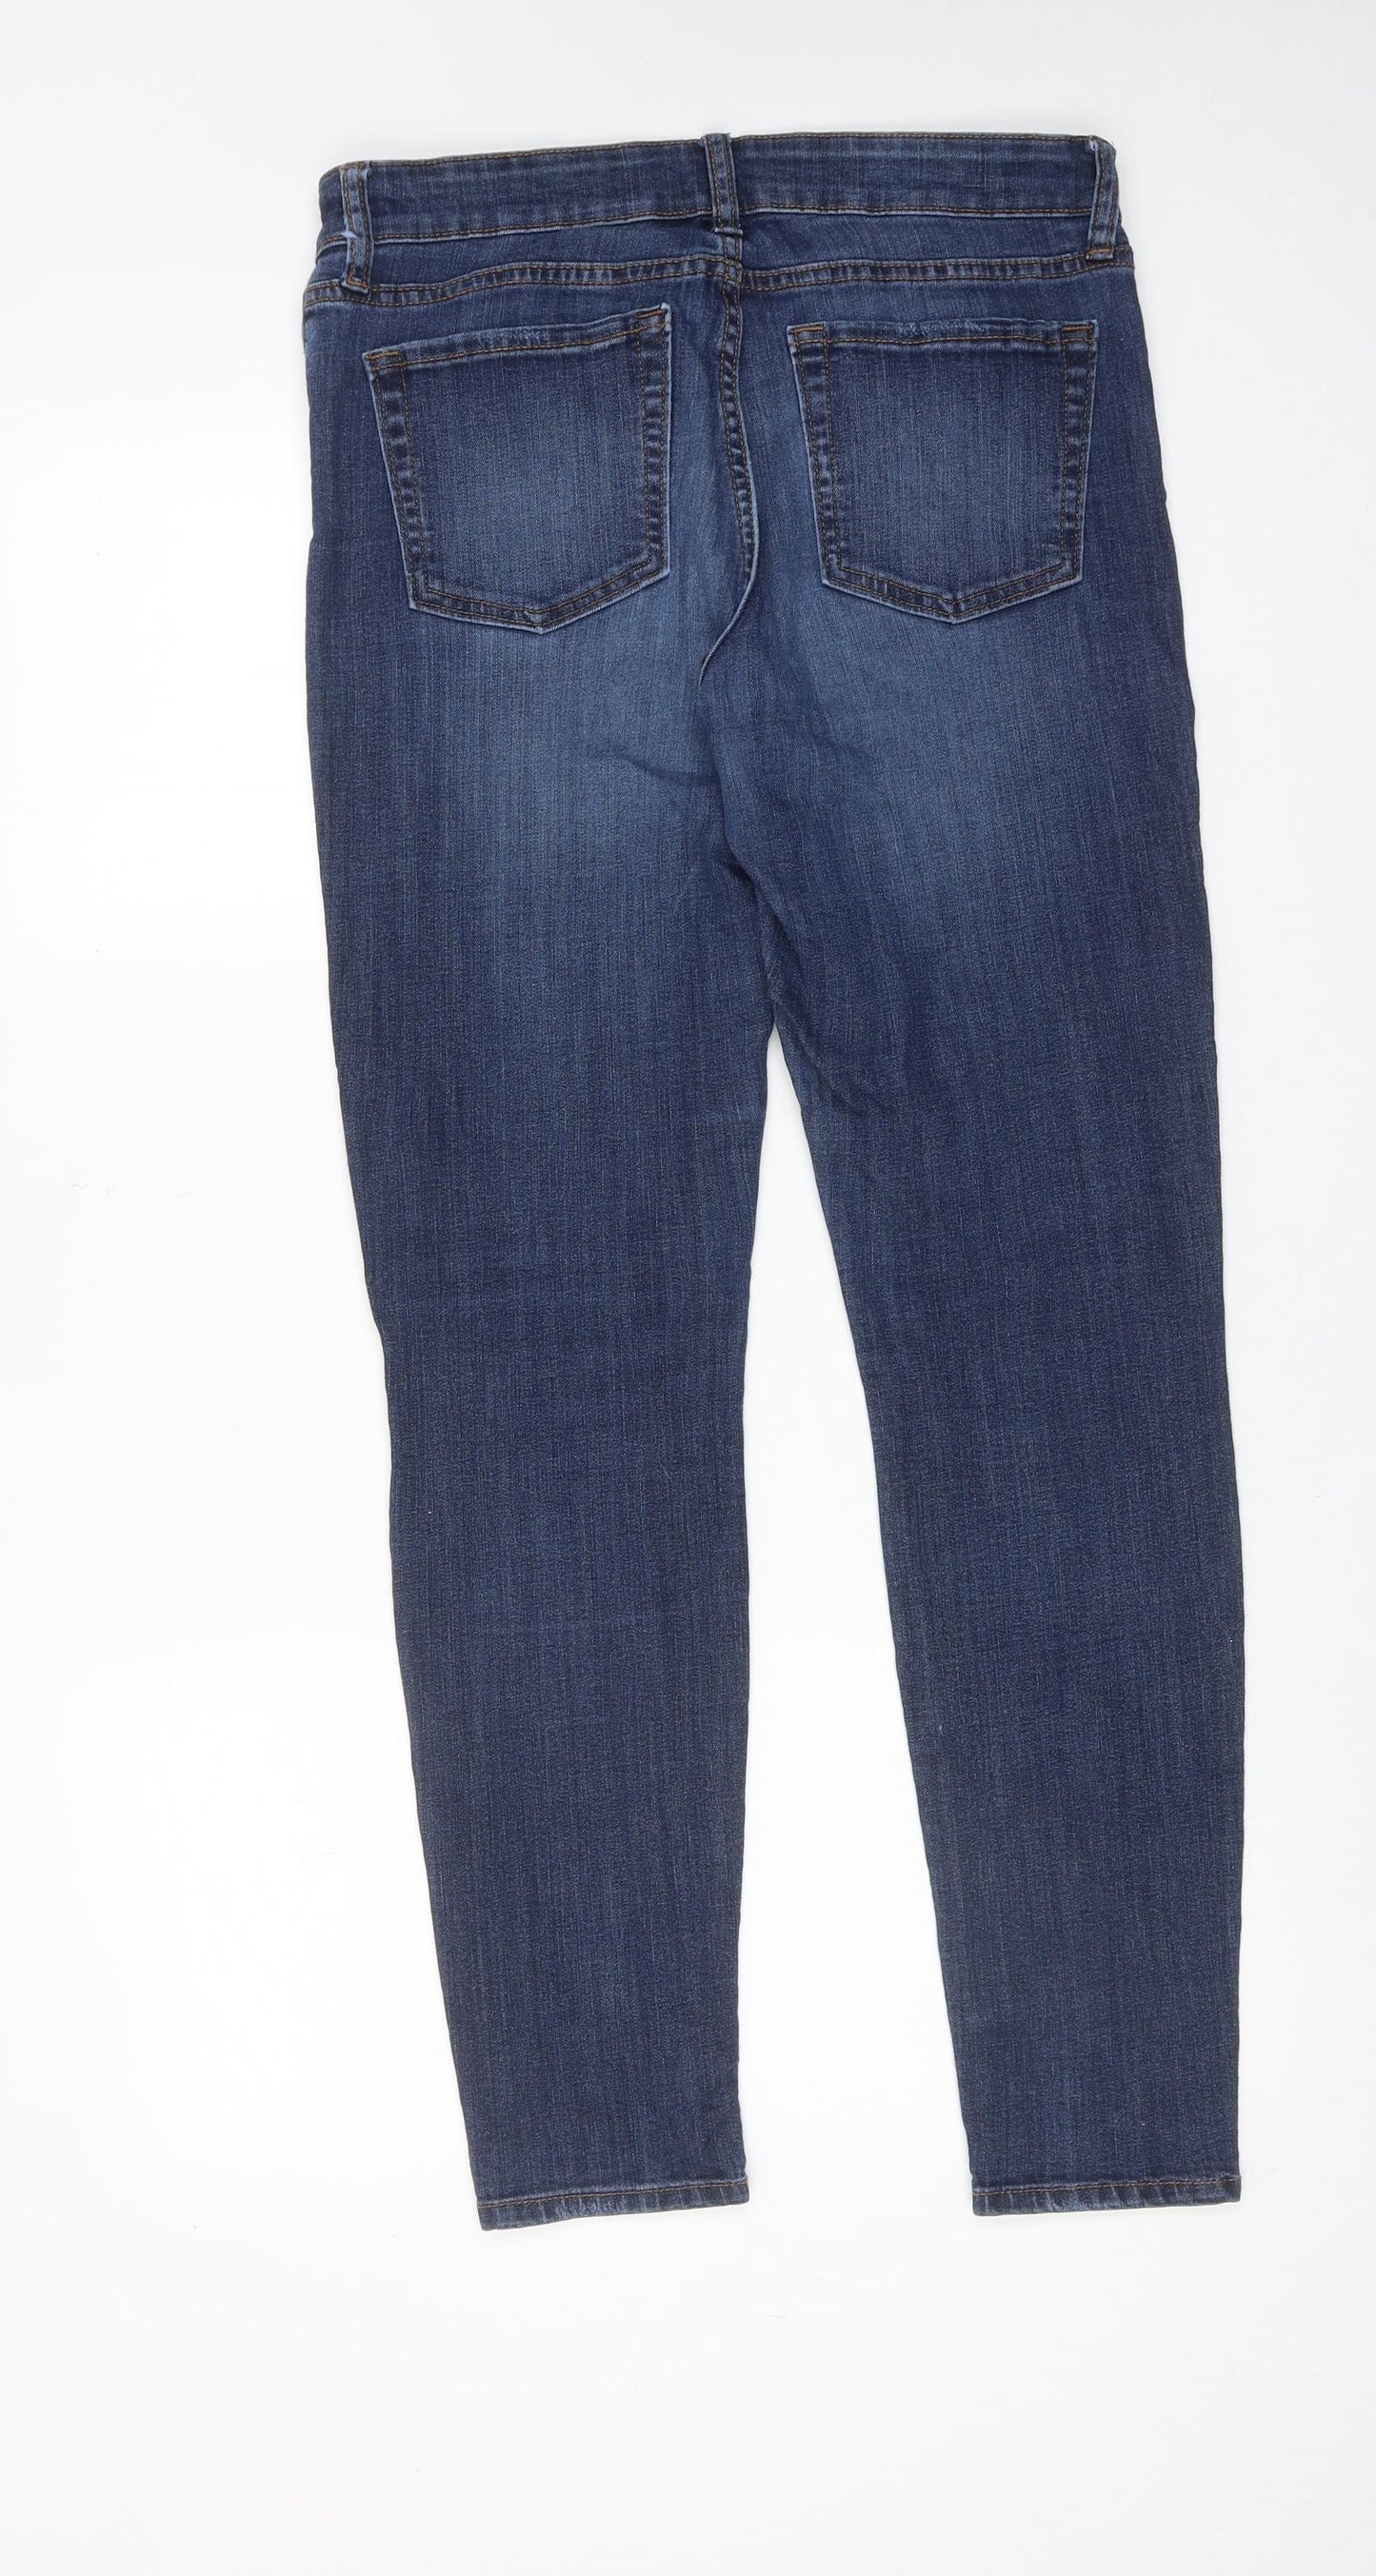 Gap Womens Blue Cotton Skinny Jeans Size 12 Regular Zip